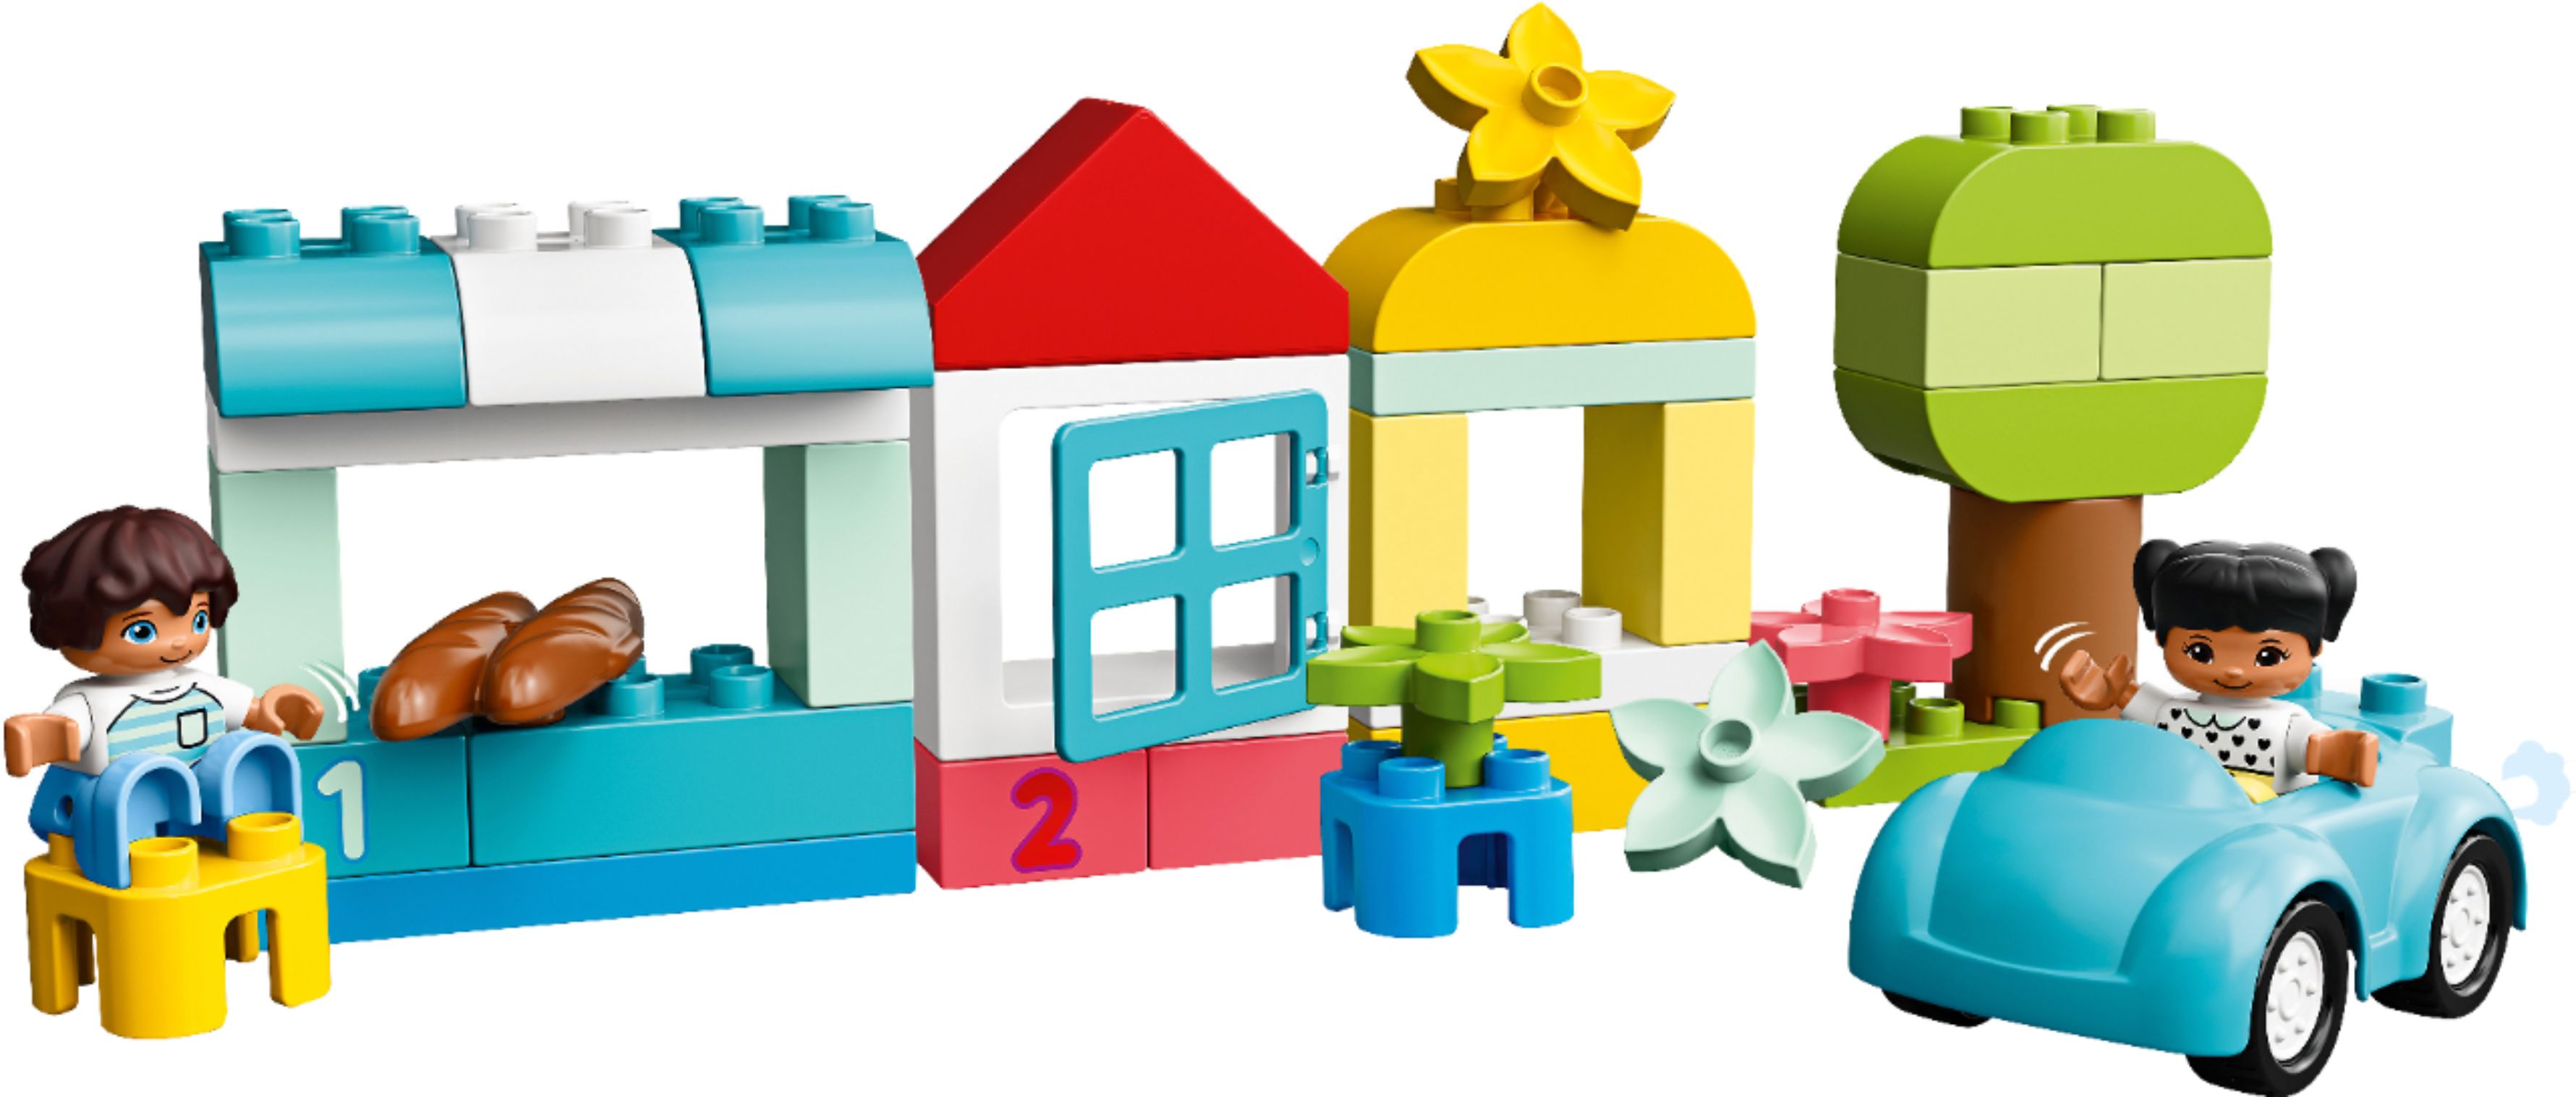 LEGO DUPLO Brick Box 10913 6288647 - Best Buy